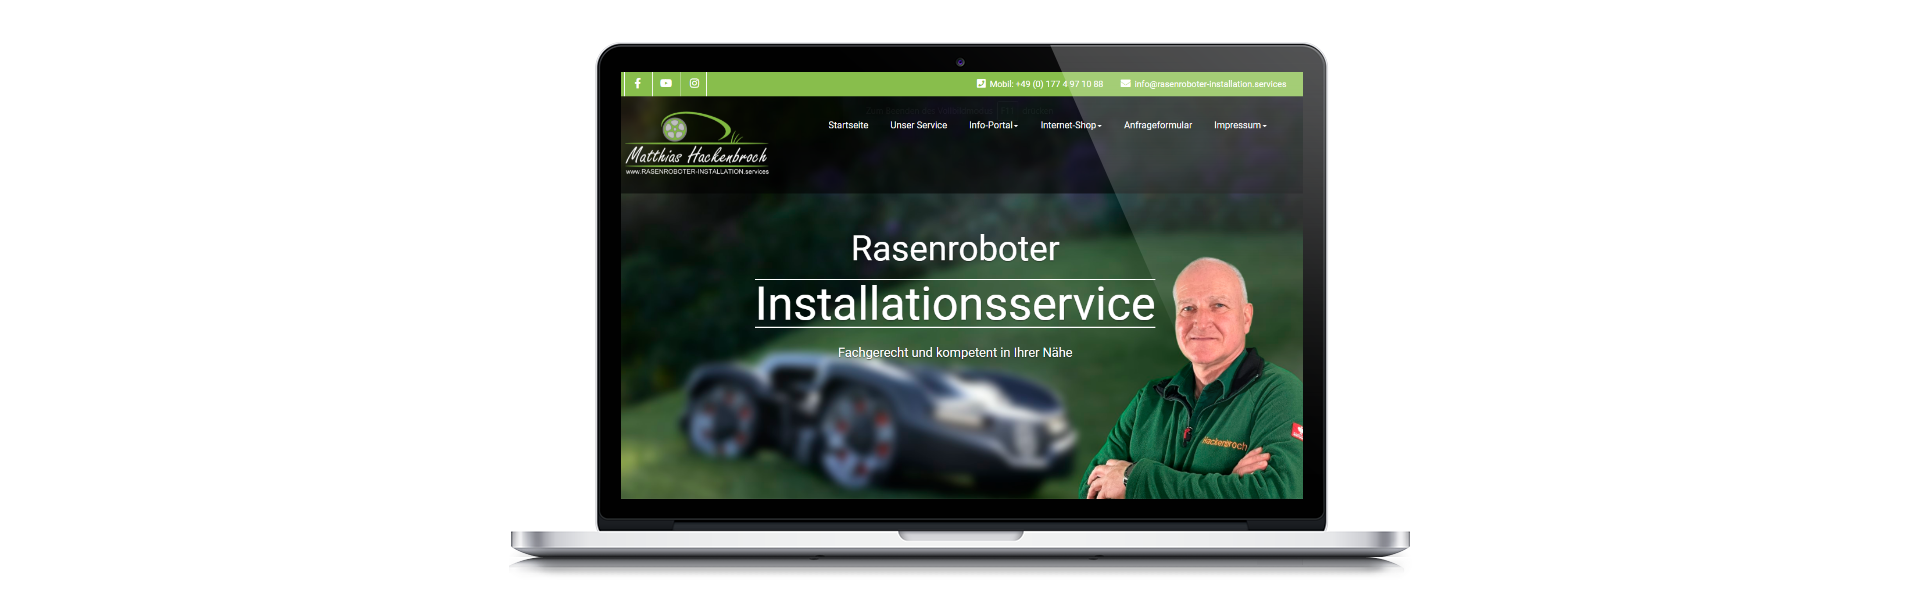 www.rasenroboter-installation.services